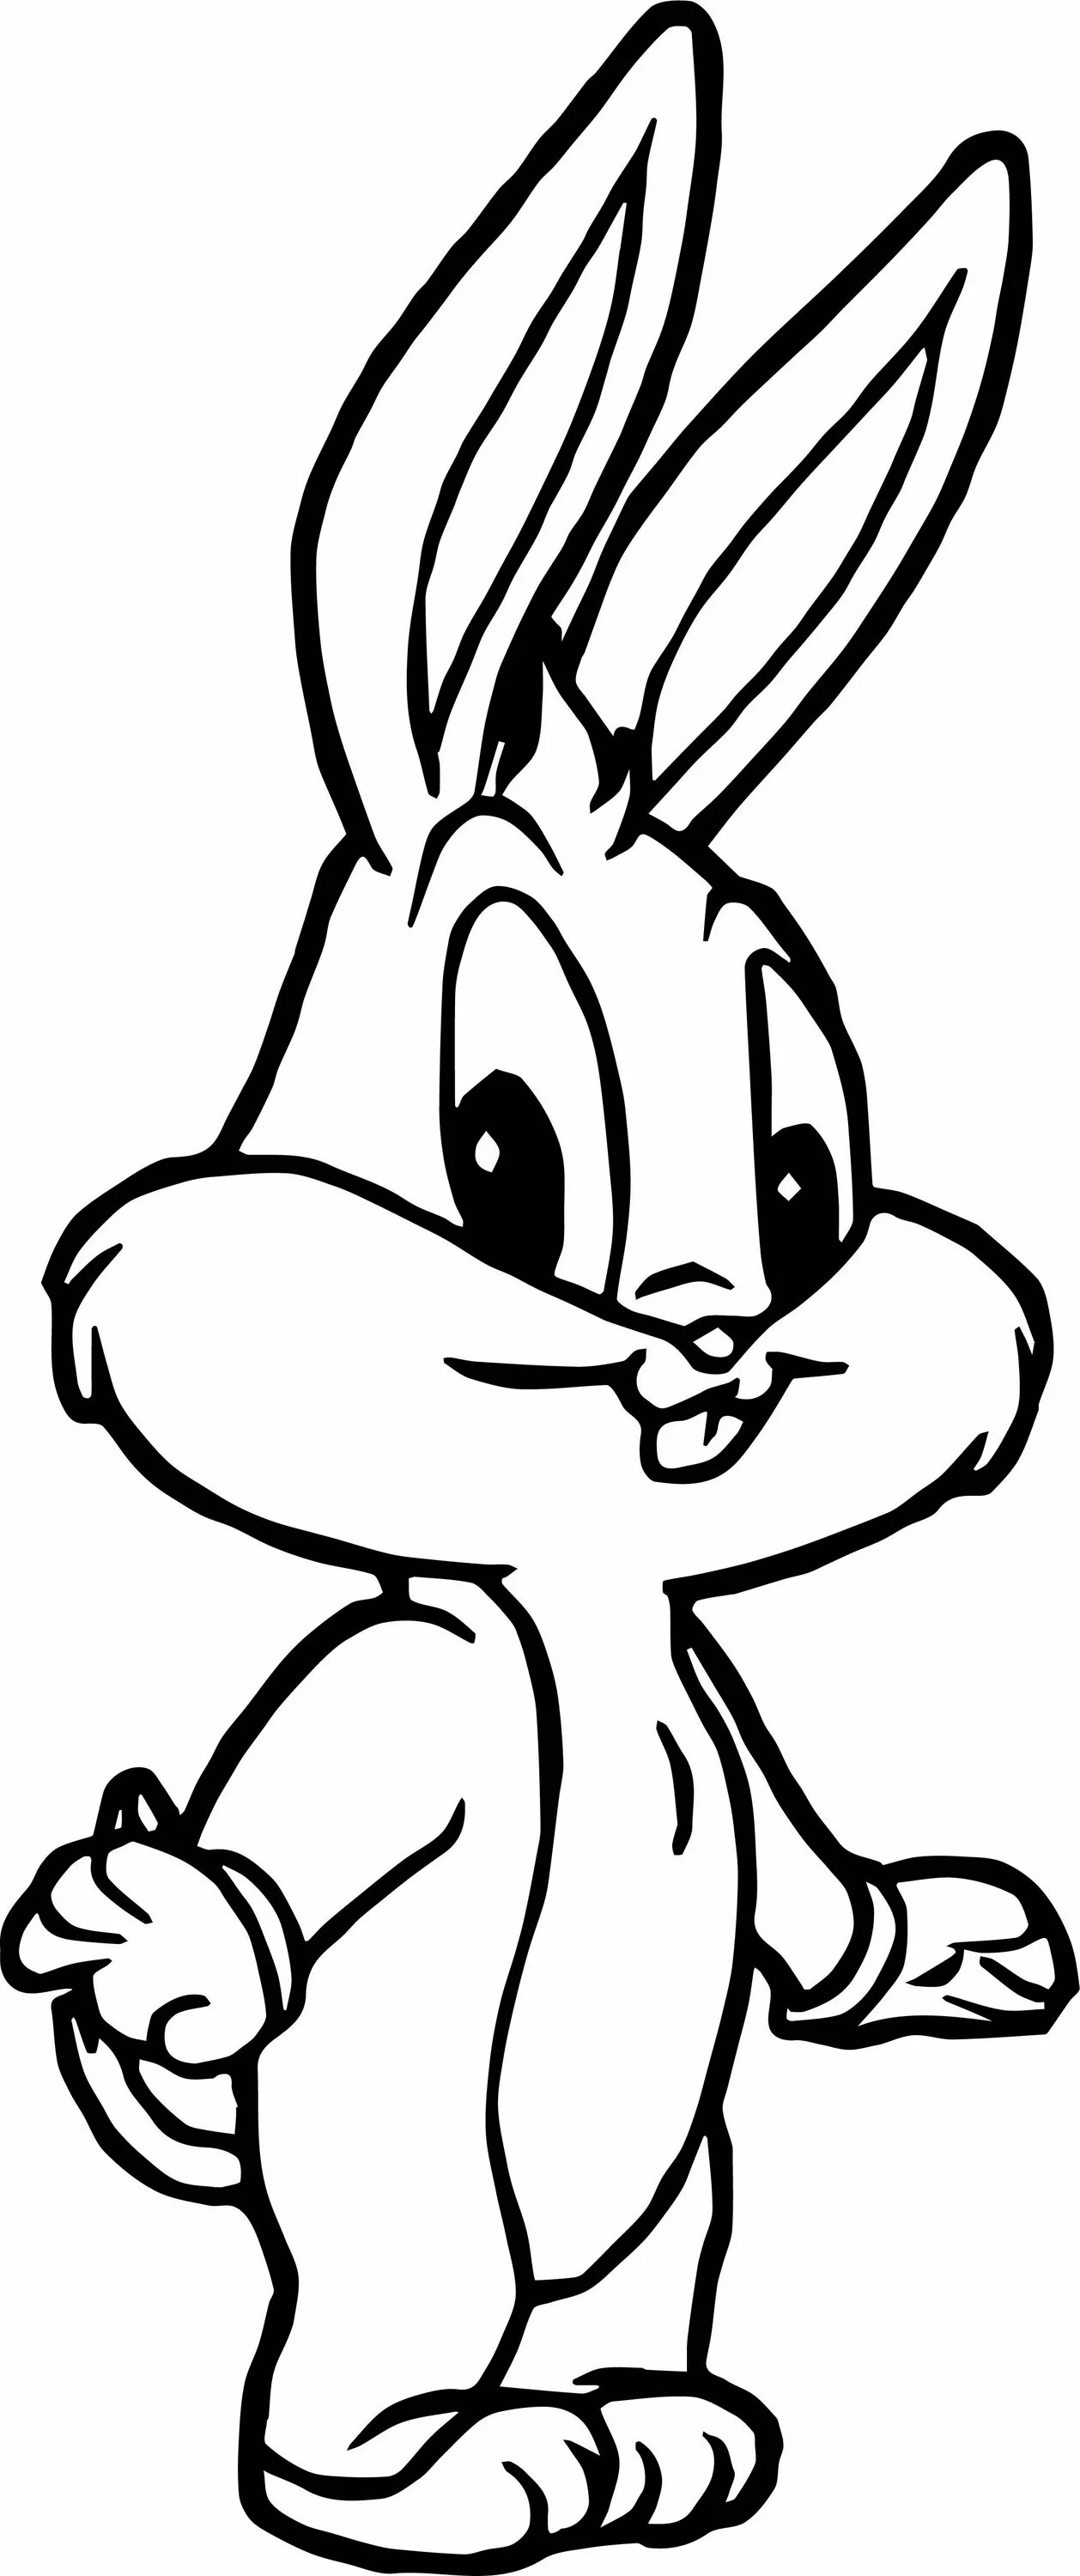 Coloring book long-cheeked cartoon rabbit